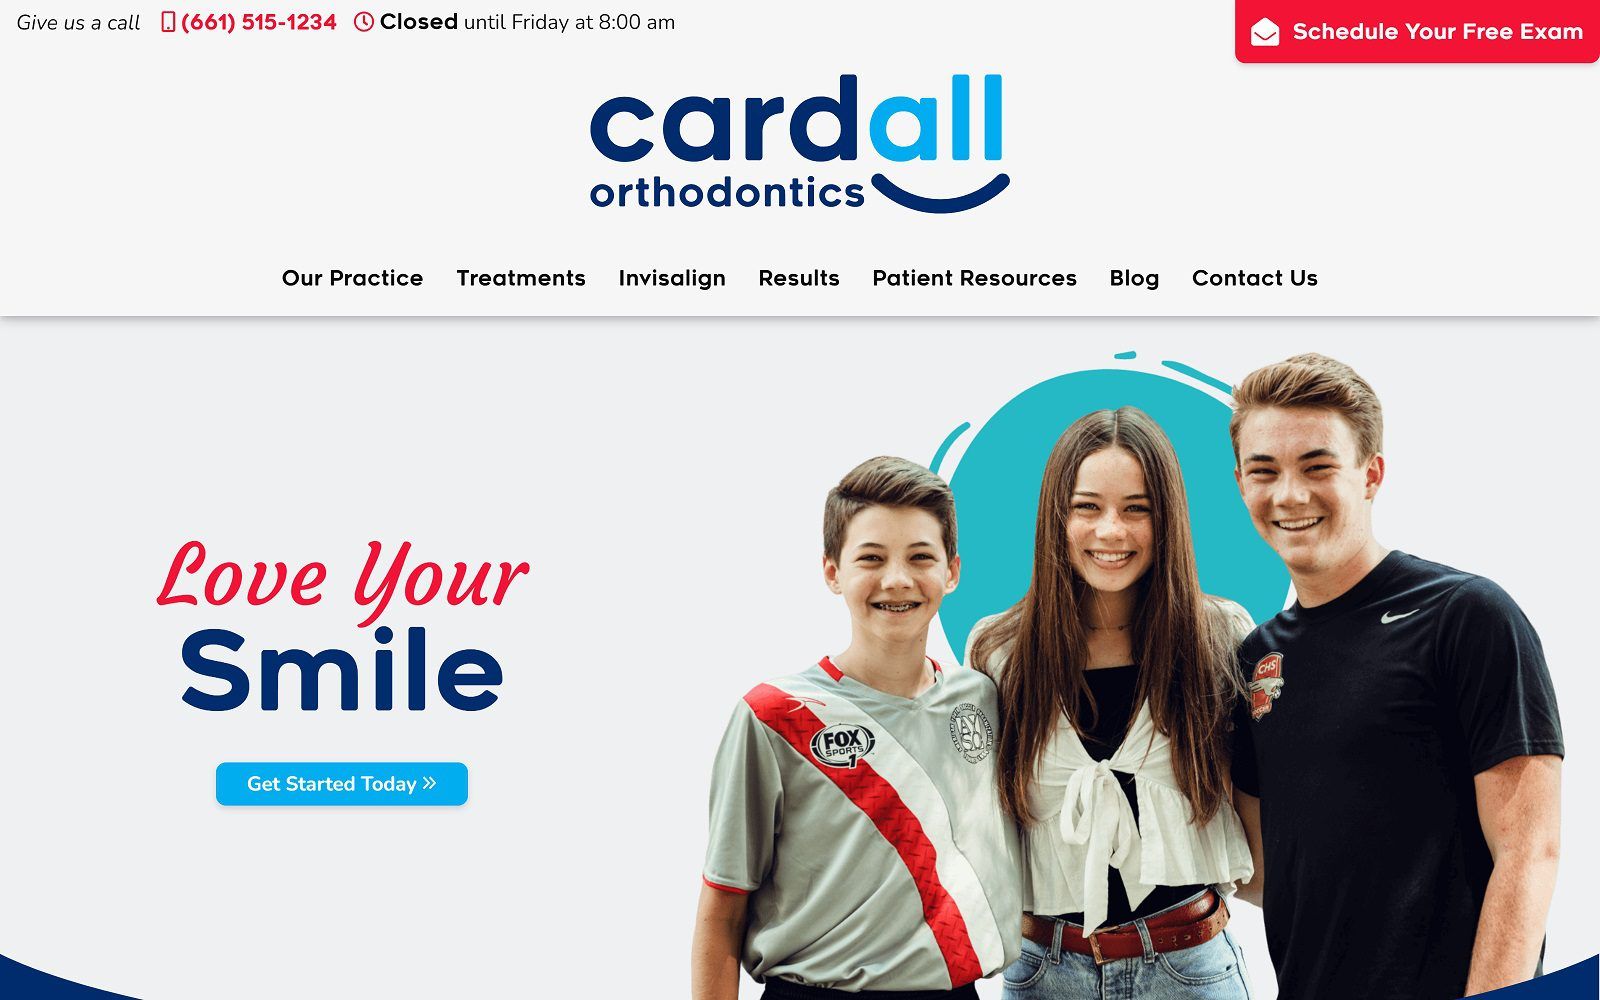 The screenshot of cardall orthodontics website